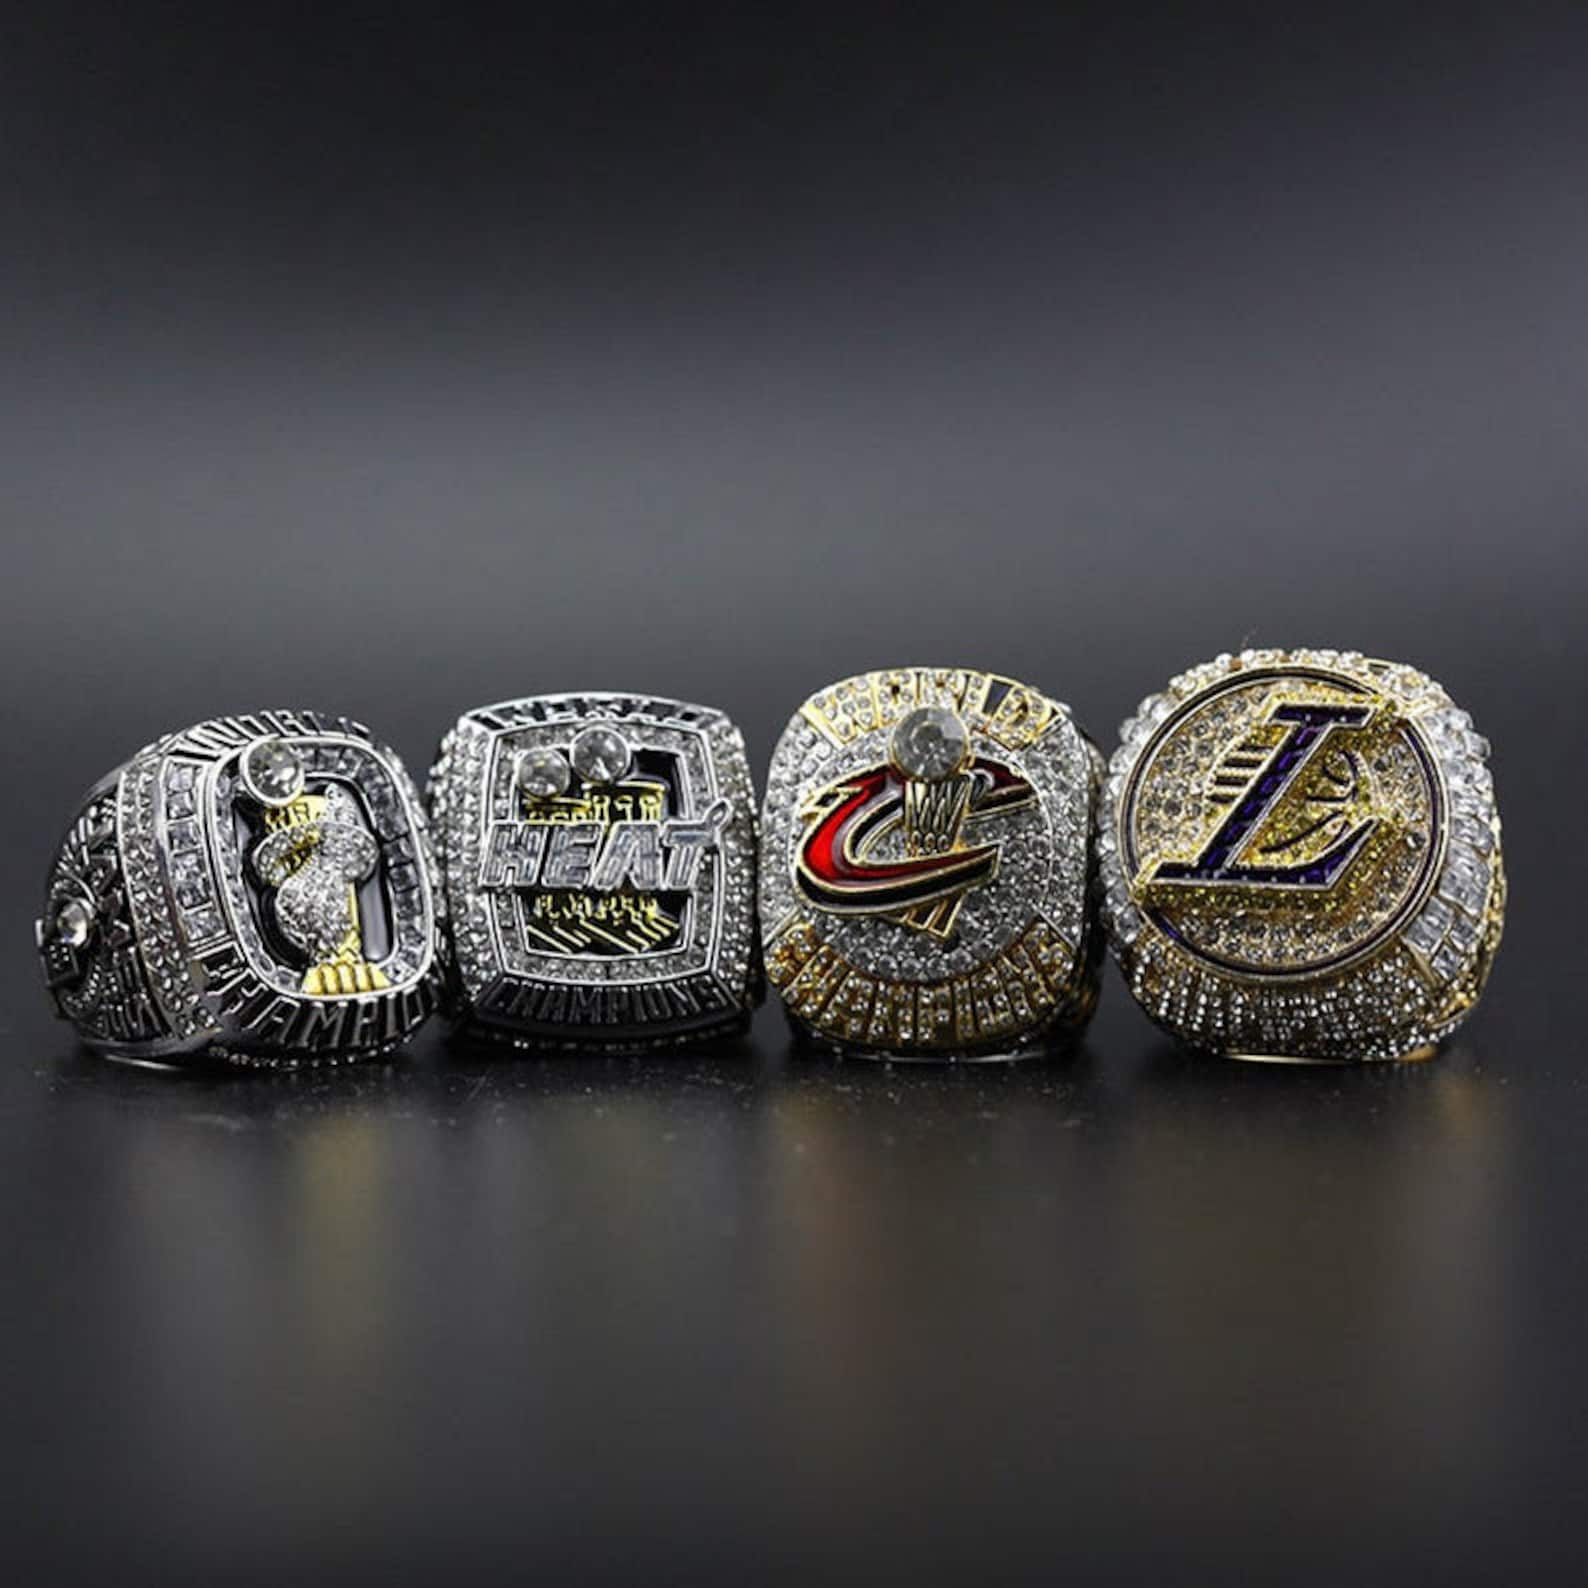 LeBron James 4 championship rings set 2020 Los Angeles Etsy